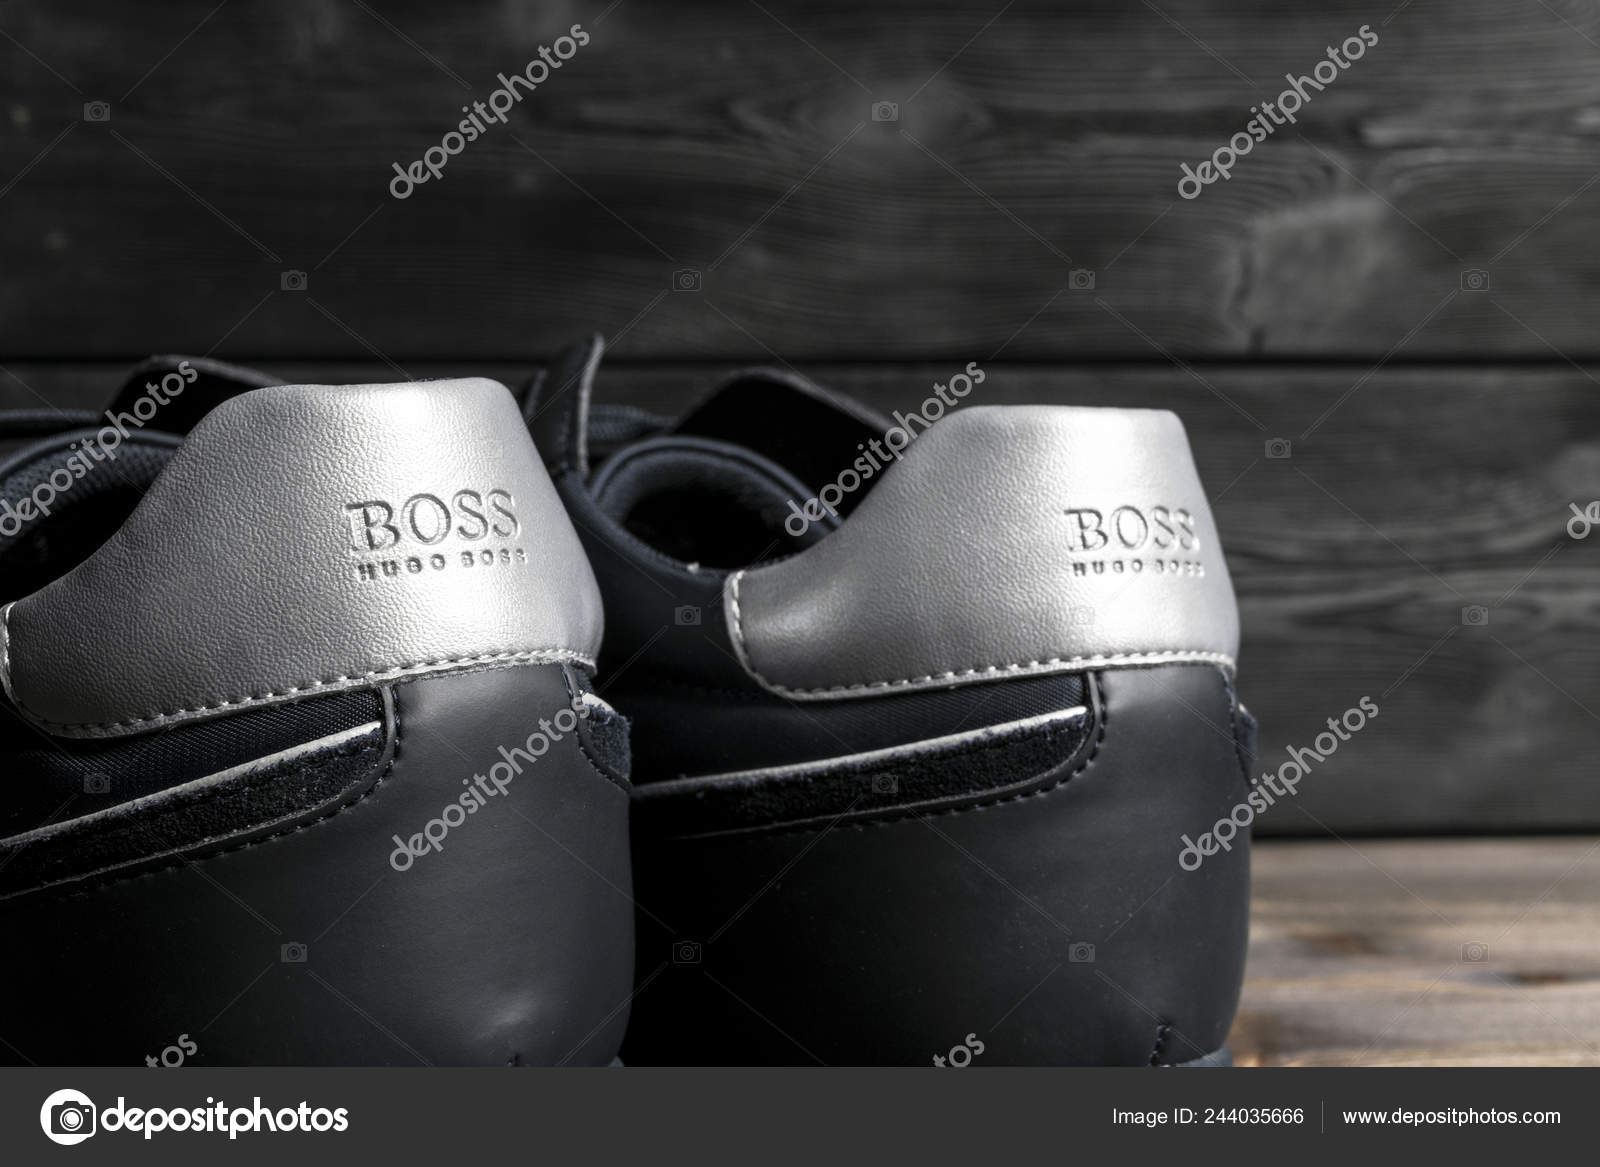 boss shoes 2018